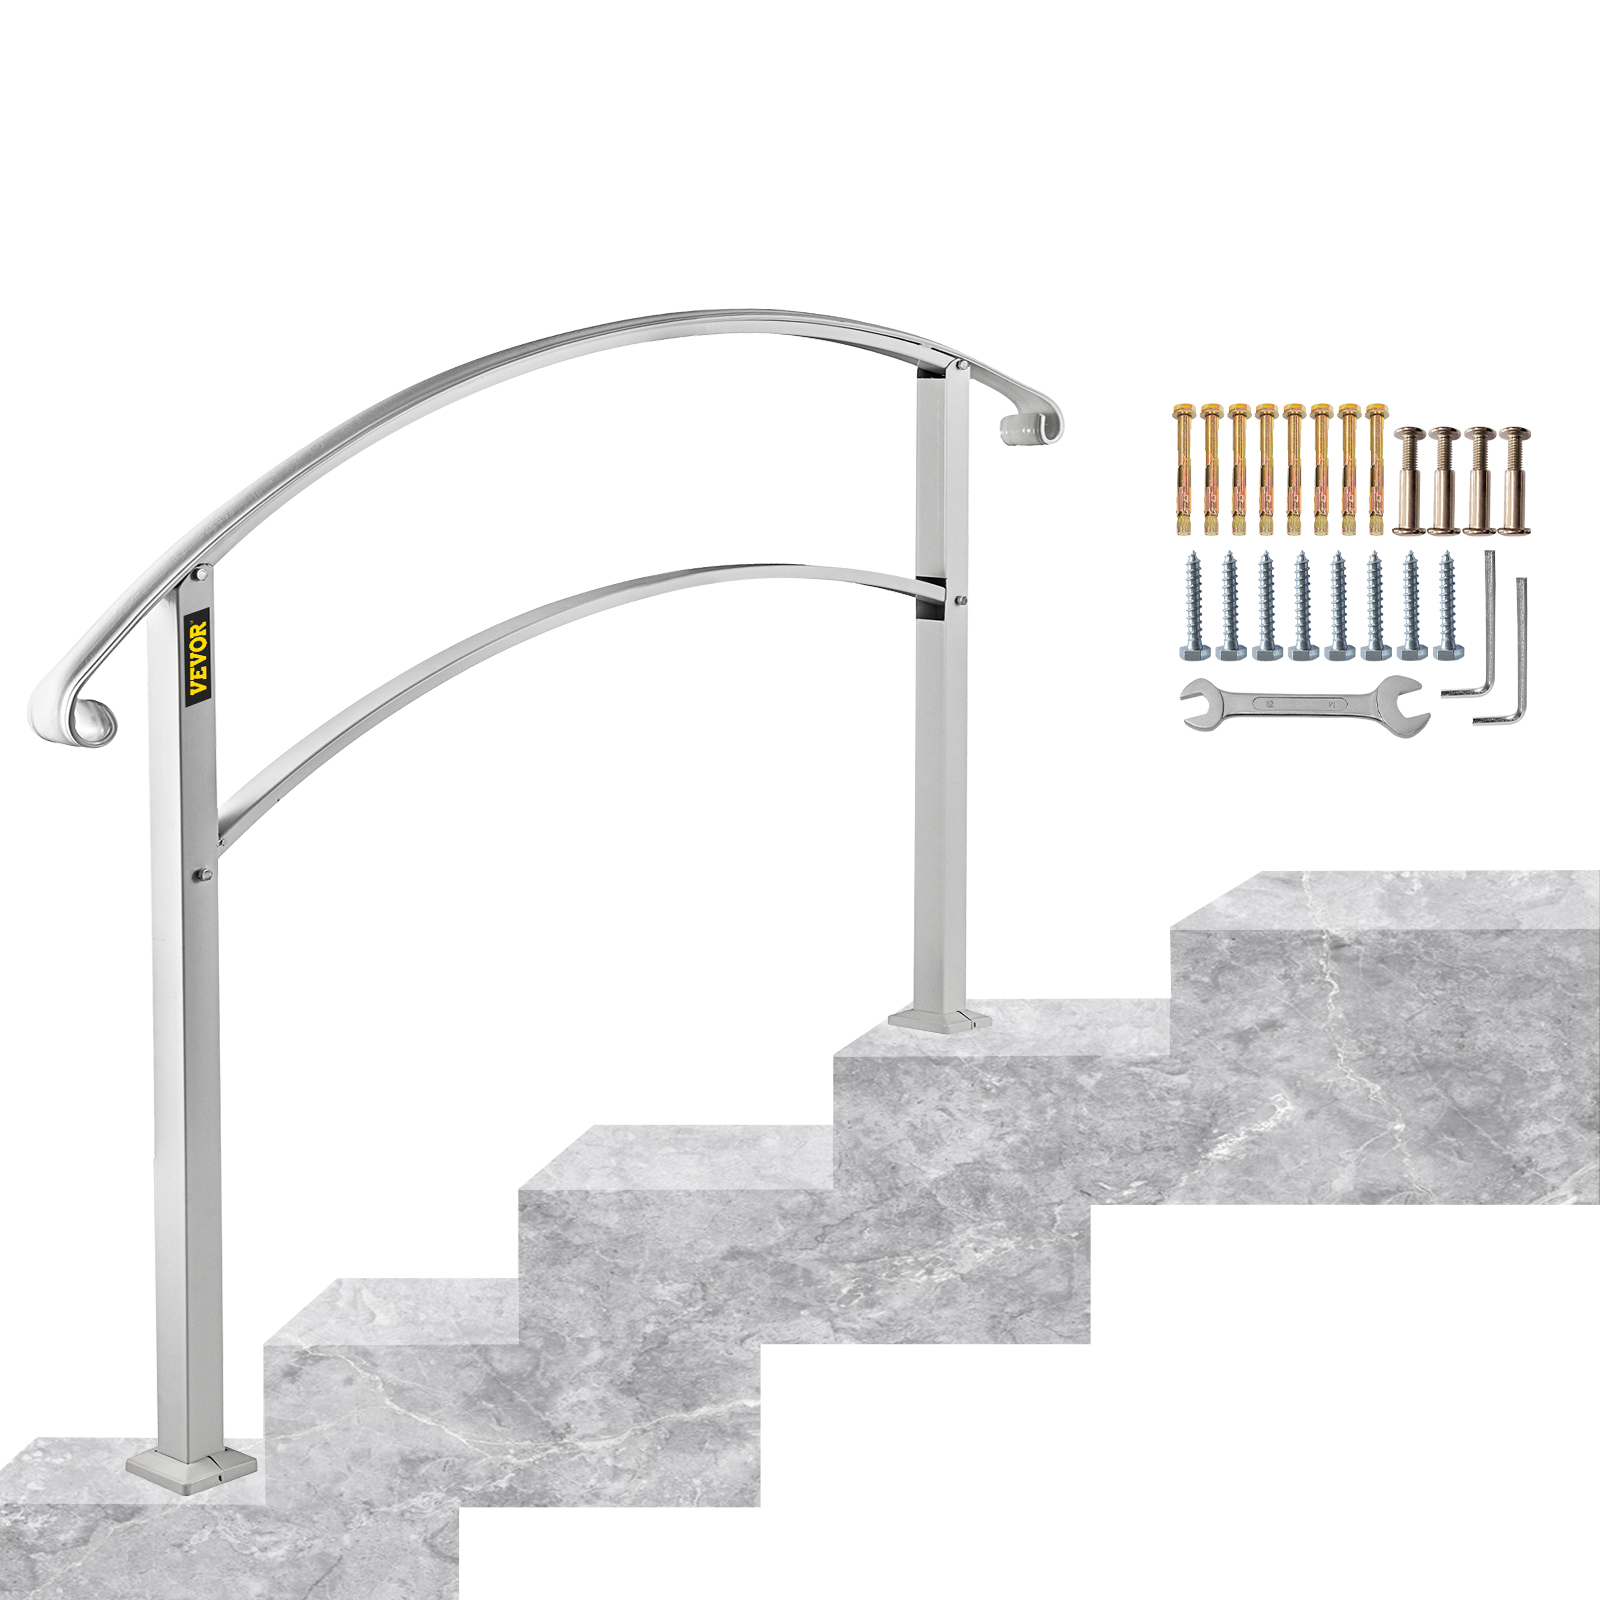 4 Ft Iron Handrail Adjustable Fits 3 Or 4 Steps Handrail Grab Handrail Garden от Vevor Many GEOs